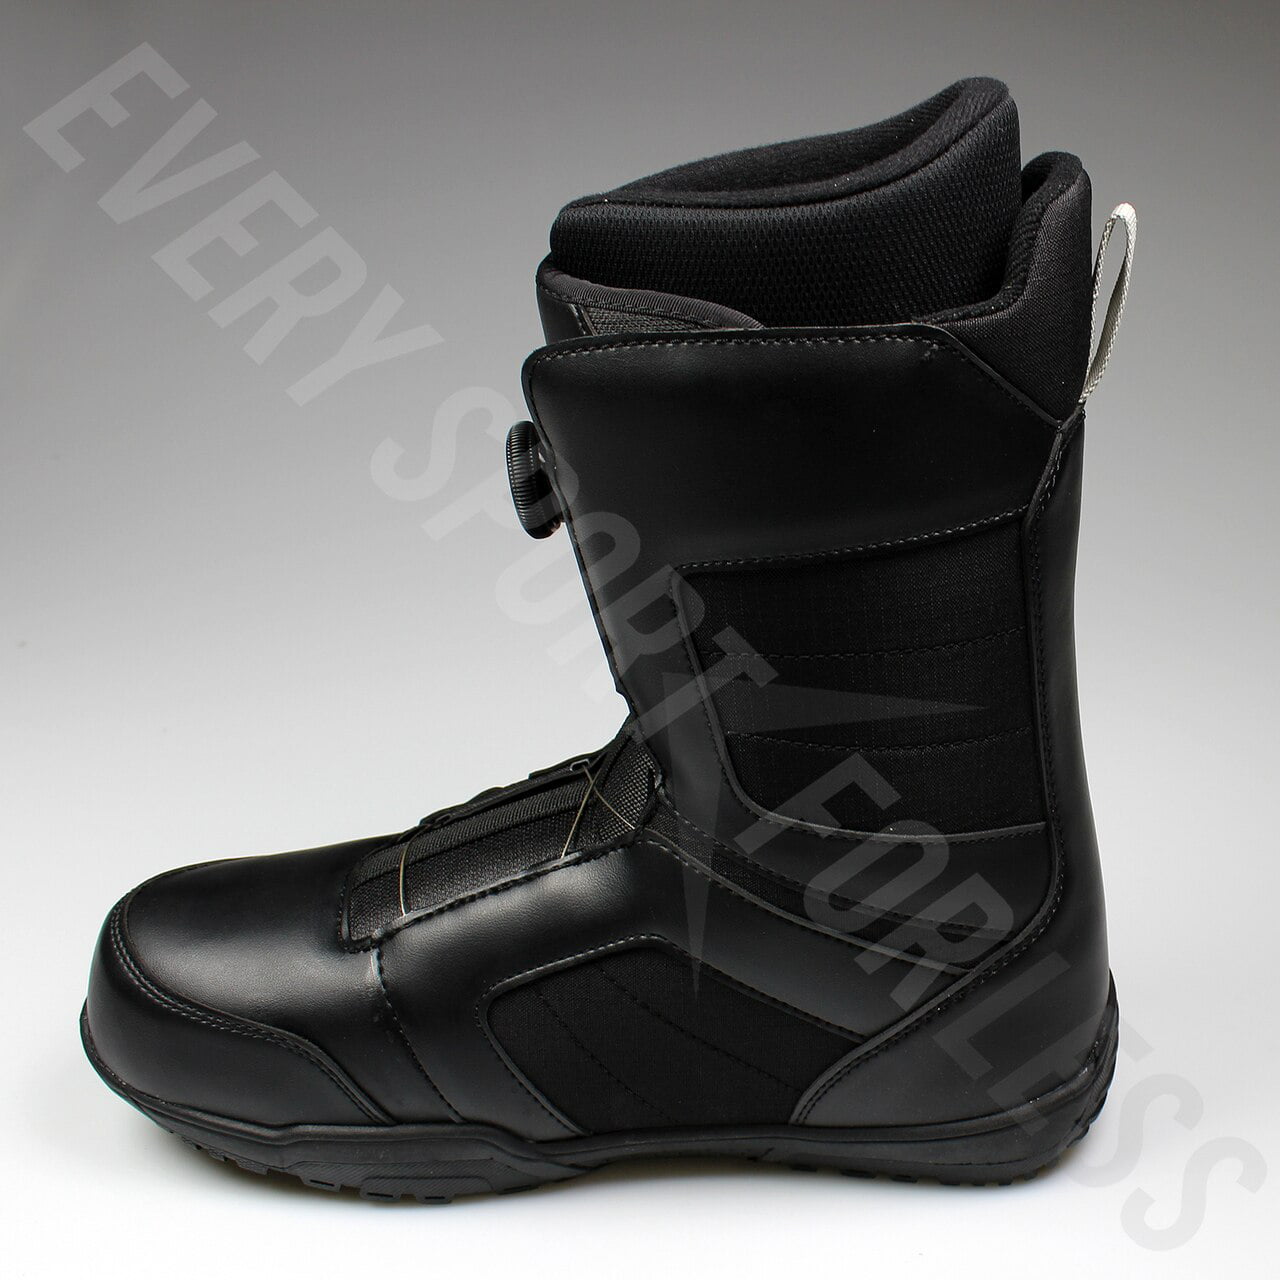 Flow Ranger BOA Senior Snowboard Boots Black NEW Lists @ $170